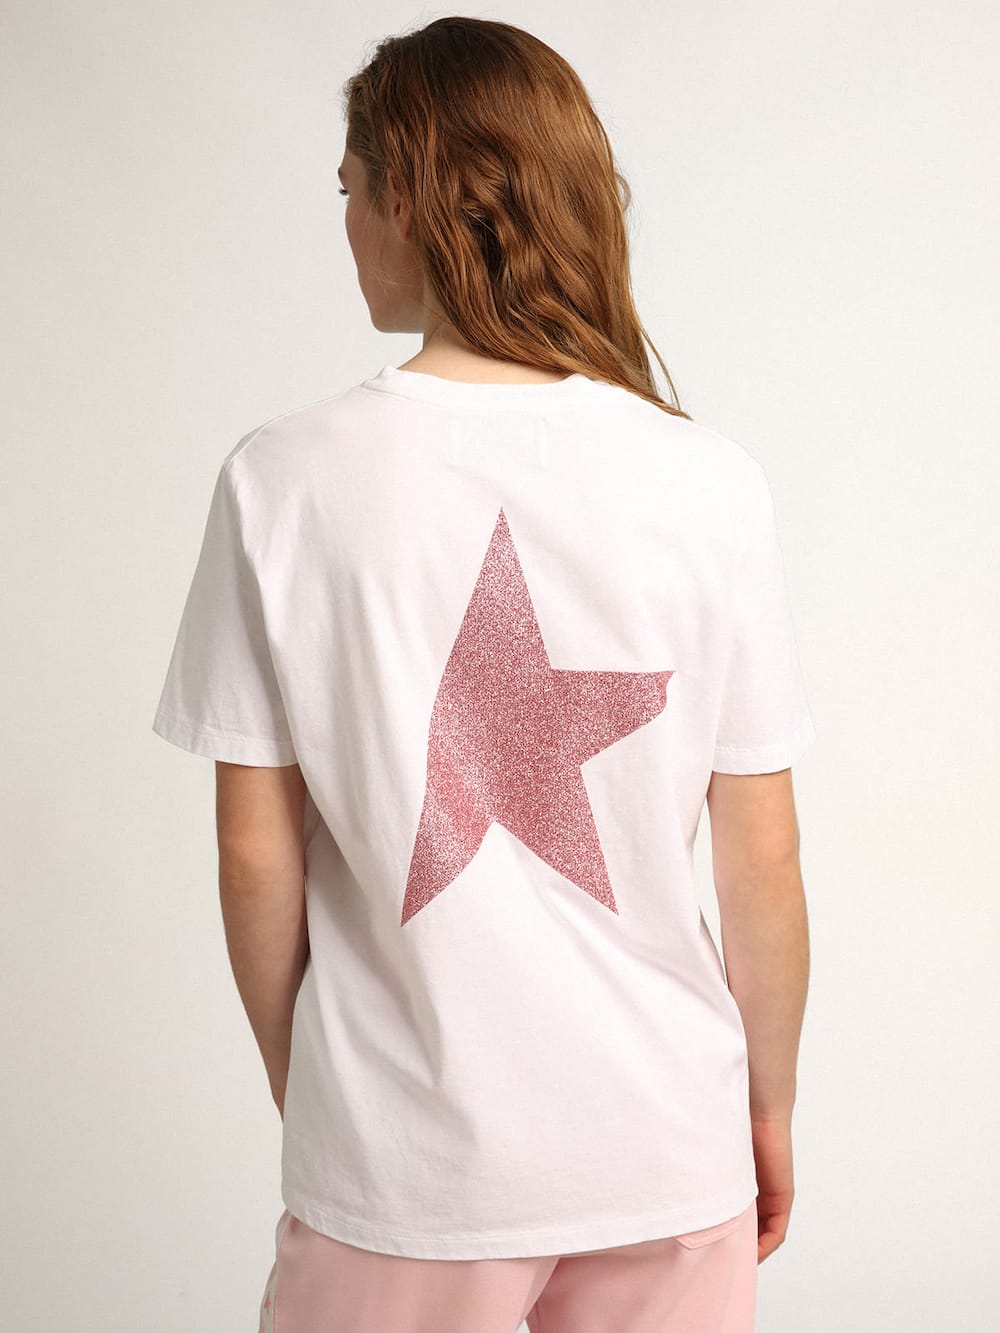 Golden Goose - T-shirt bianca da donna con logo e stella in glitter rosa  in 